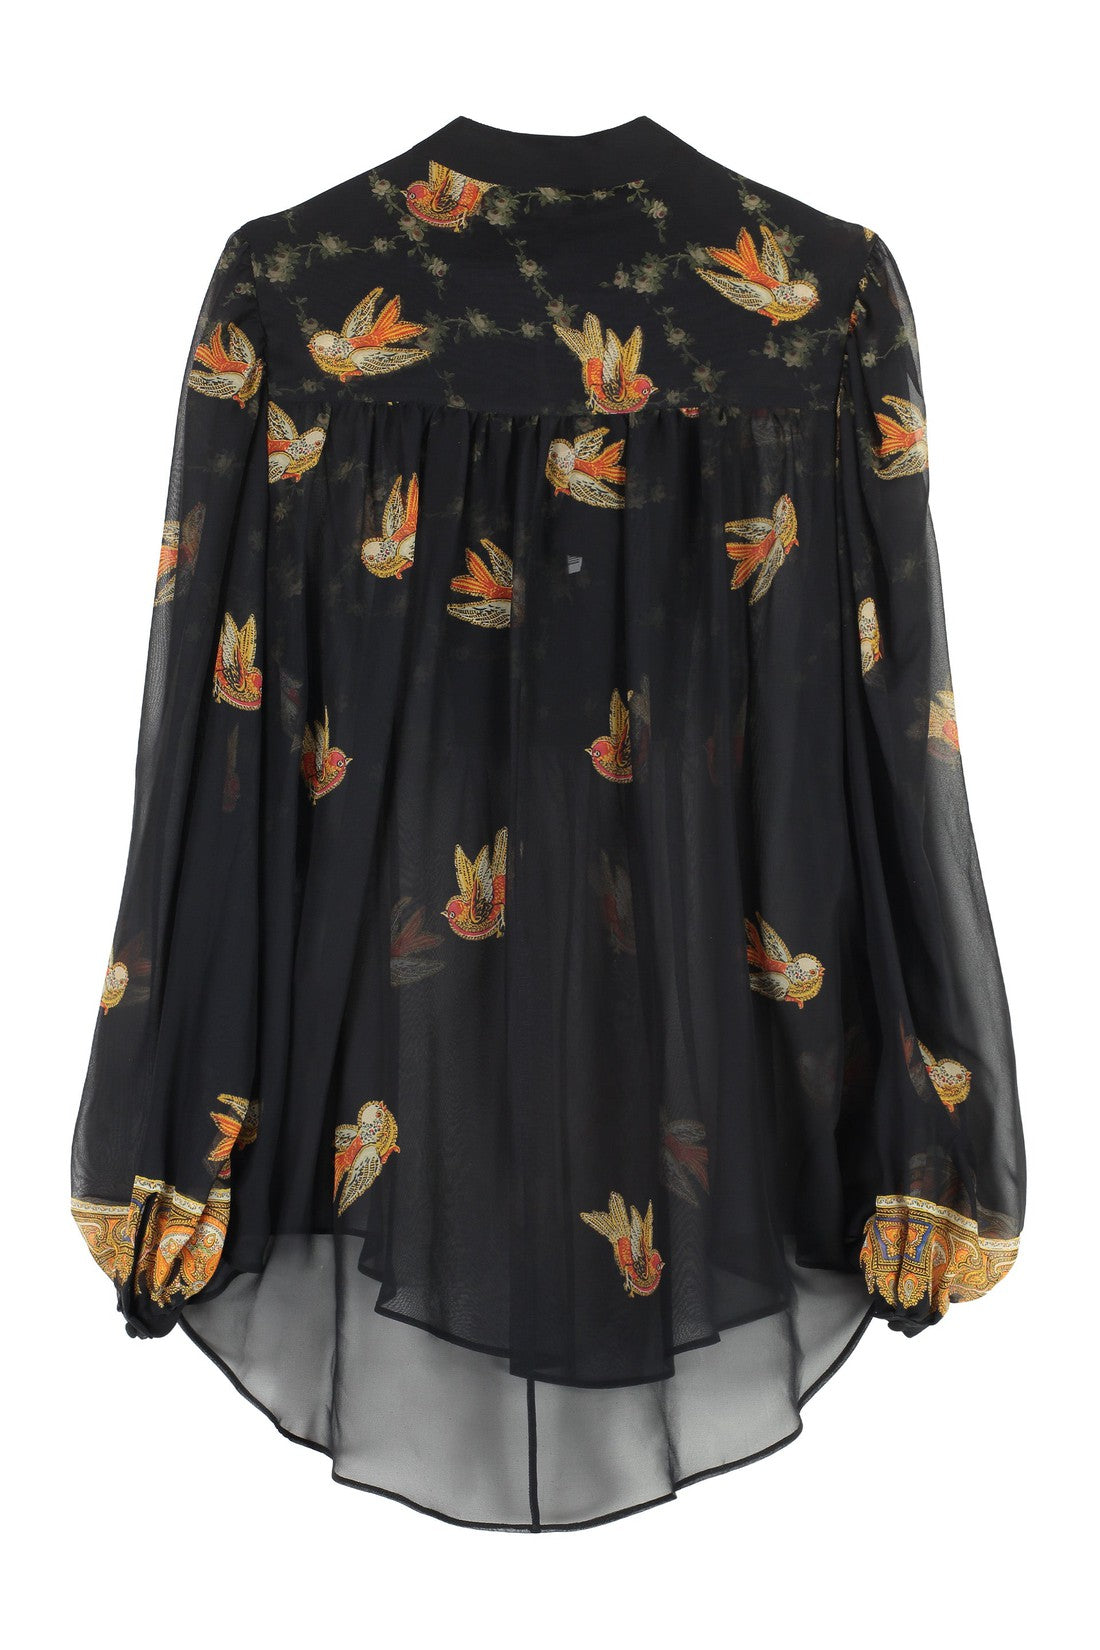 Etro-OUTLET-SALE-Printed georgette blouse-ARCHIVIST